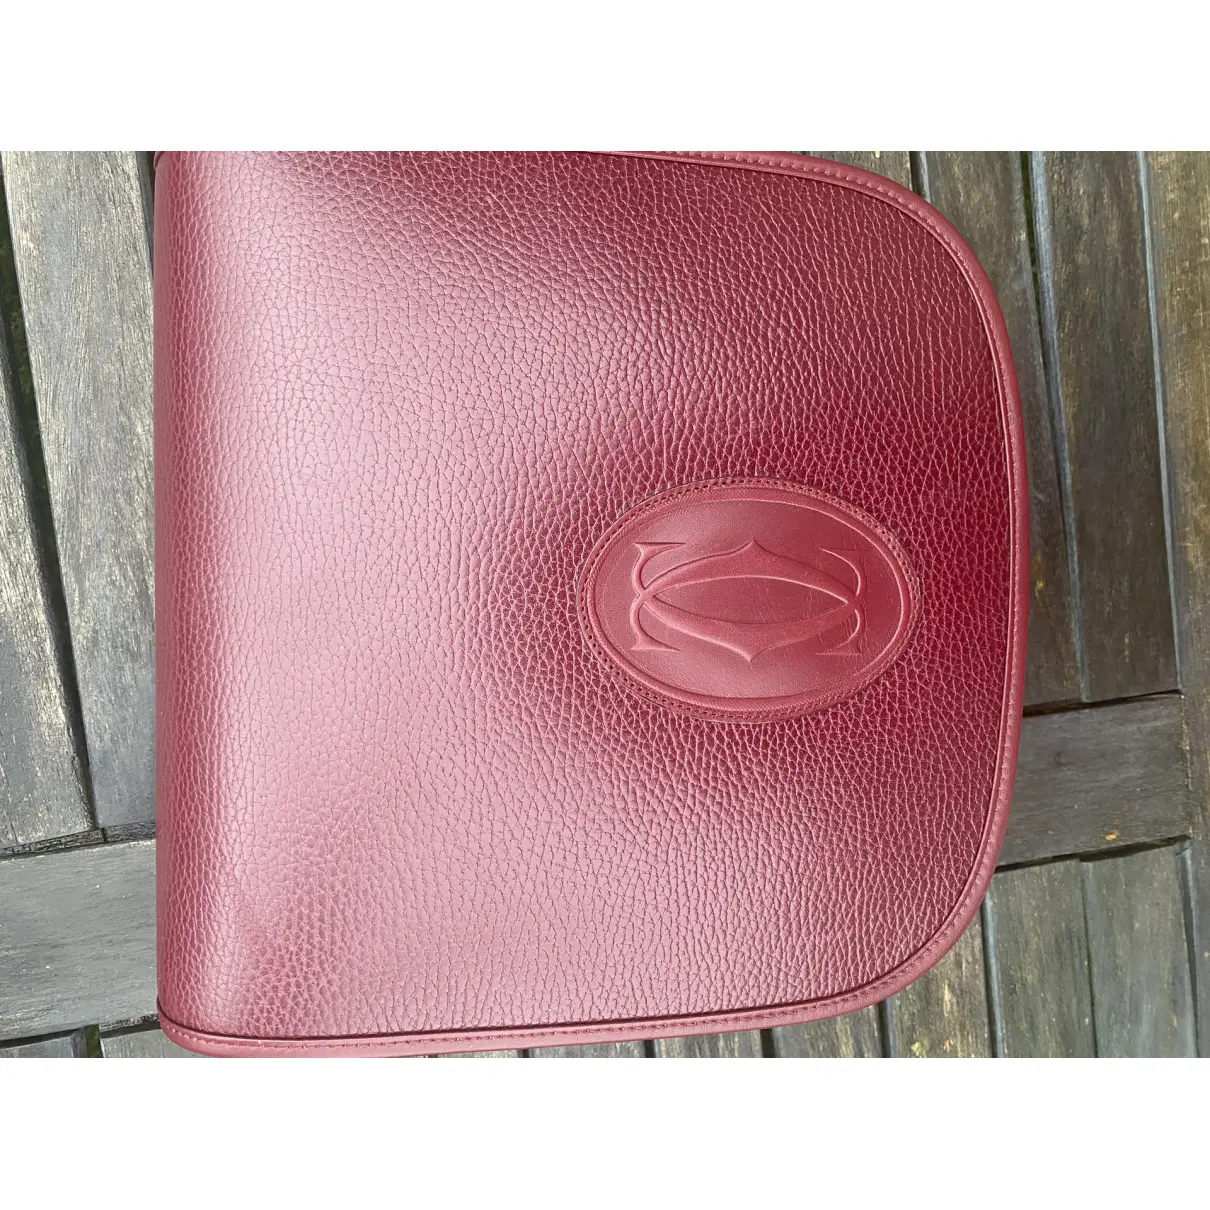 Buy Cartier Leather crossbody bag online